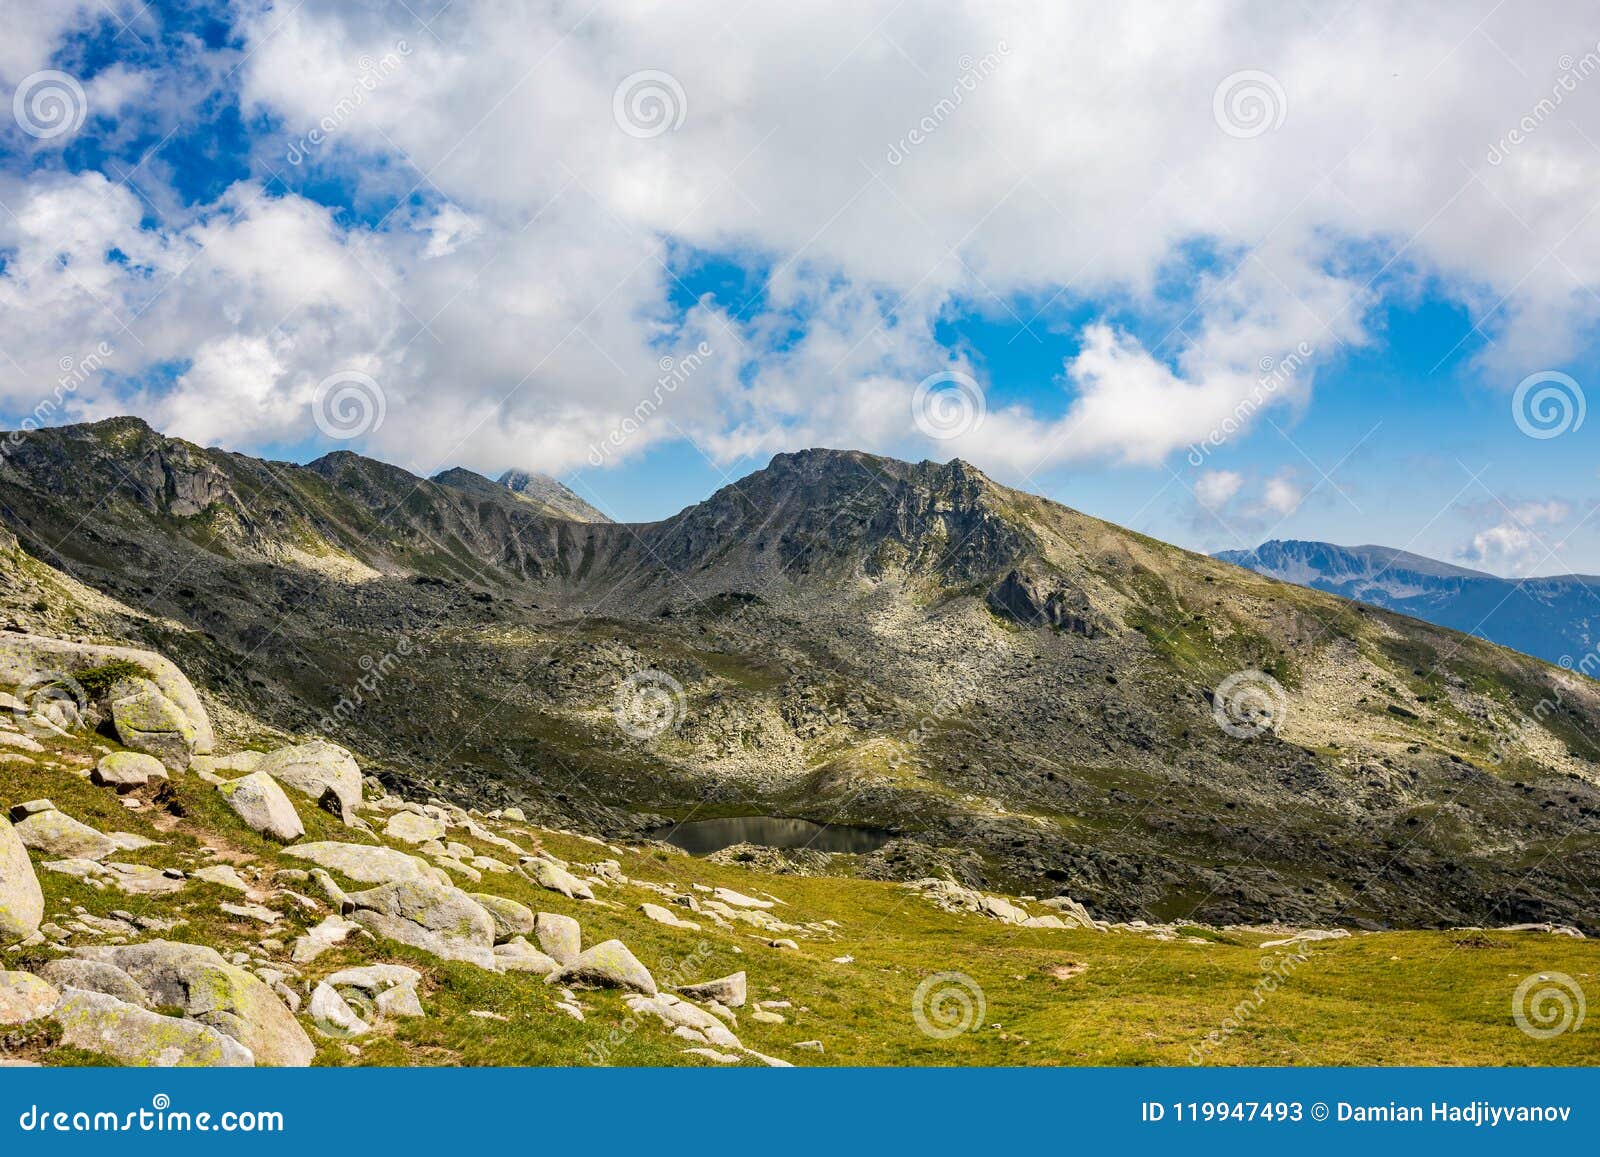 Scenery Summer Landscape, Pirin Mountain, Bulgaria Stock Image - Image ...